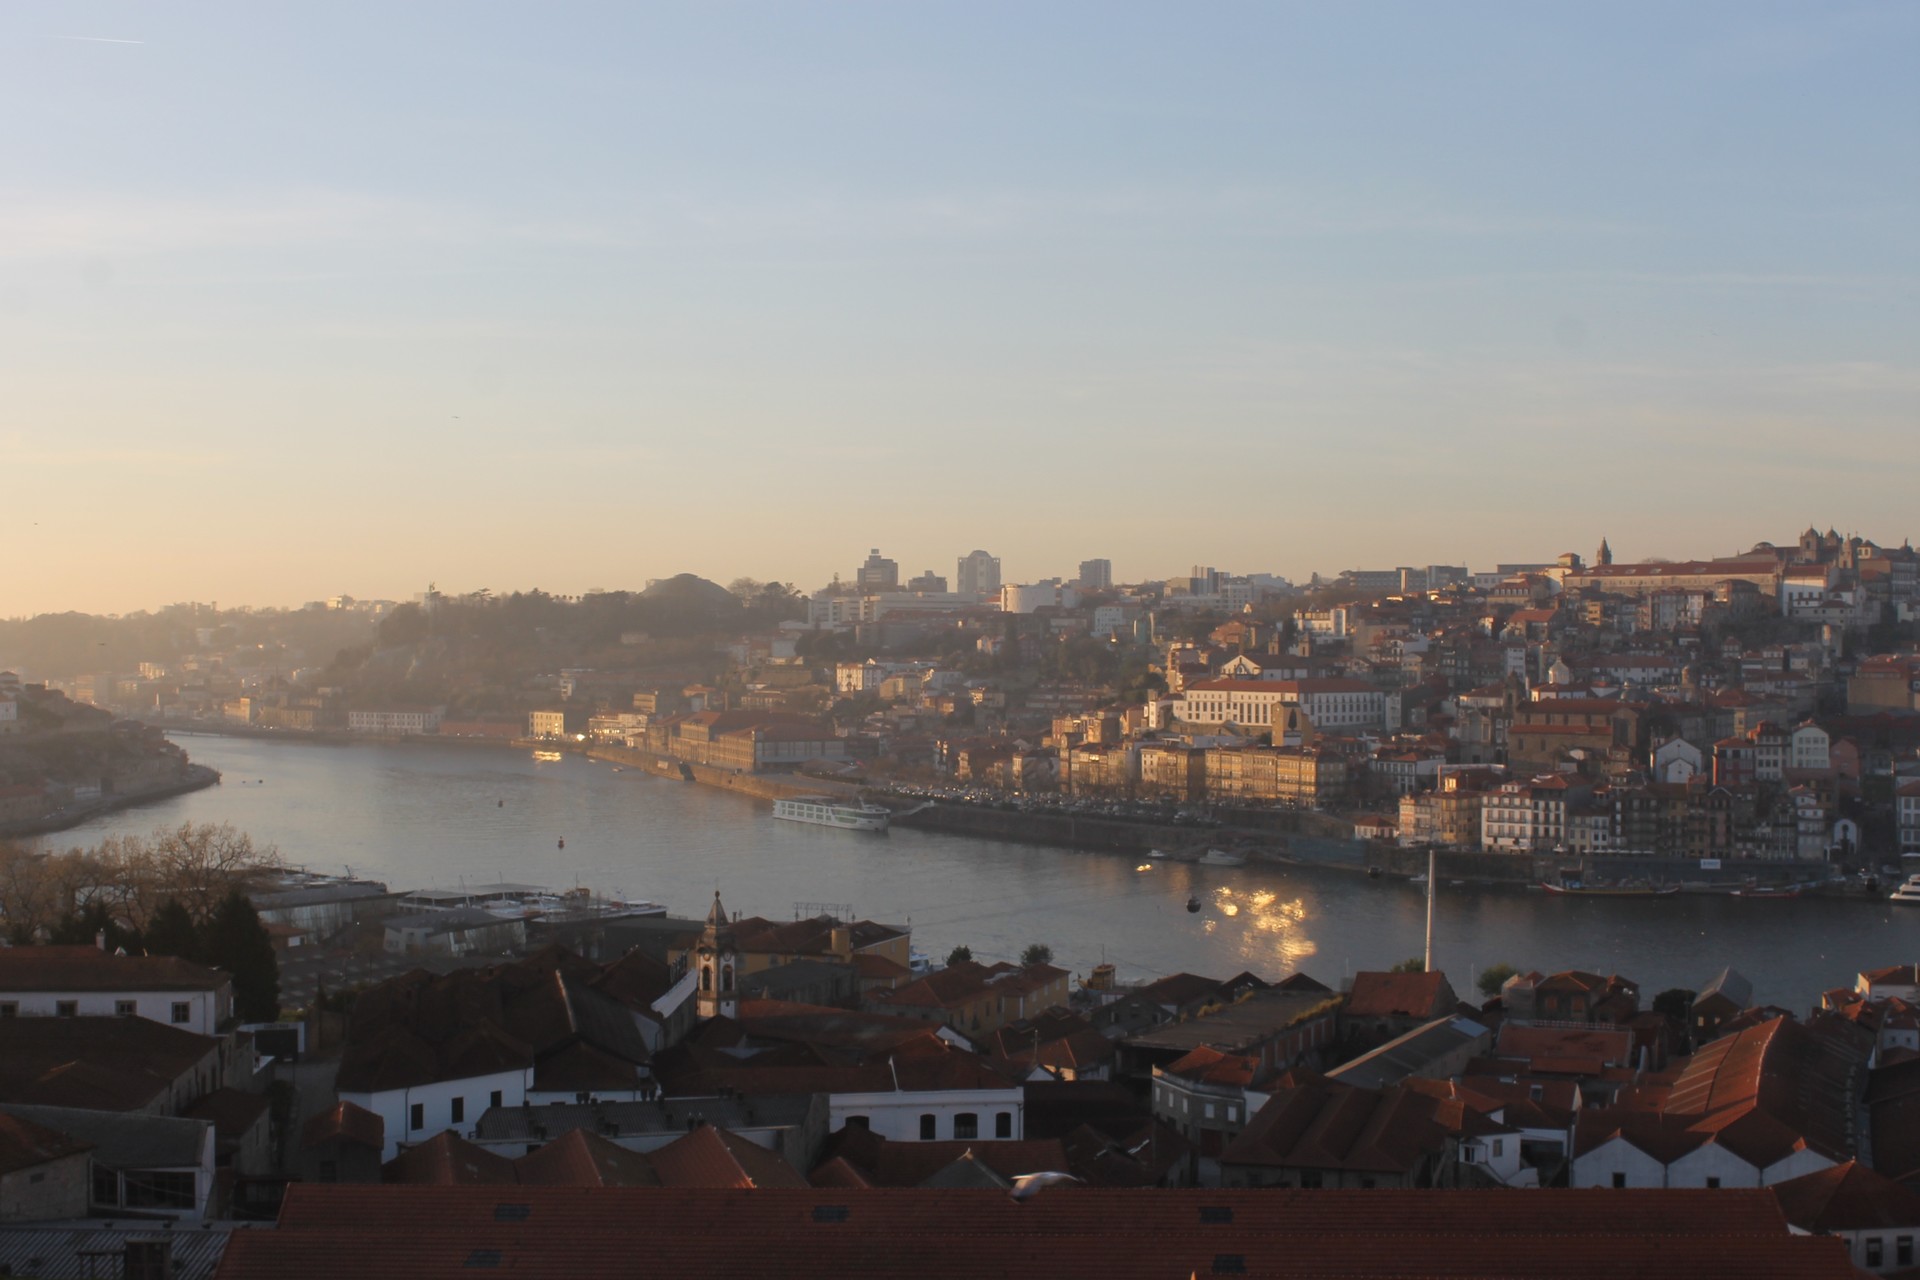 The History of Oporto